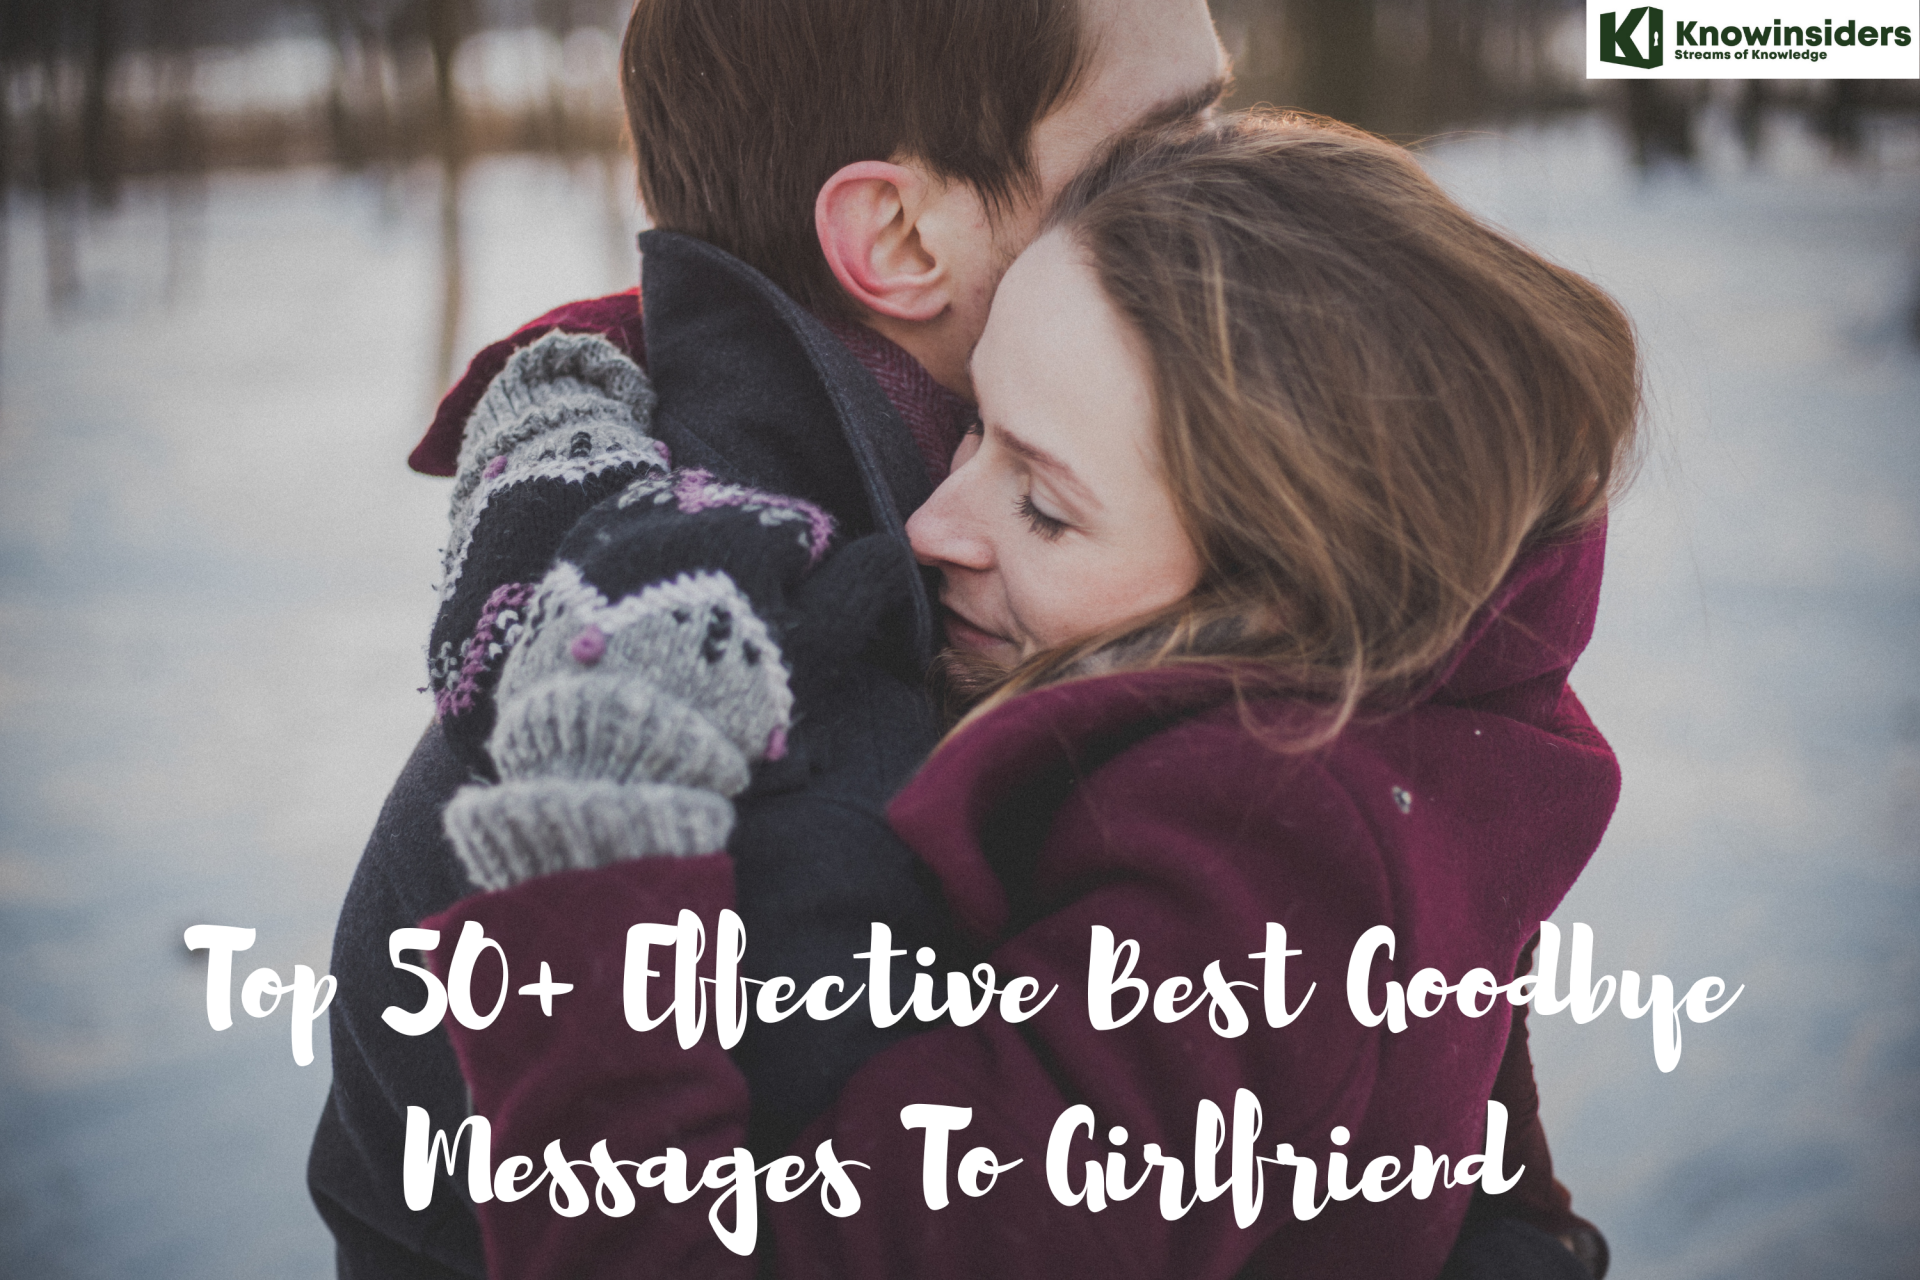 Top 50+ Effective Best Goodbye Messages To Girlfriend